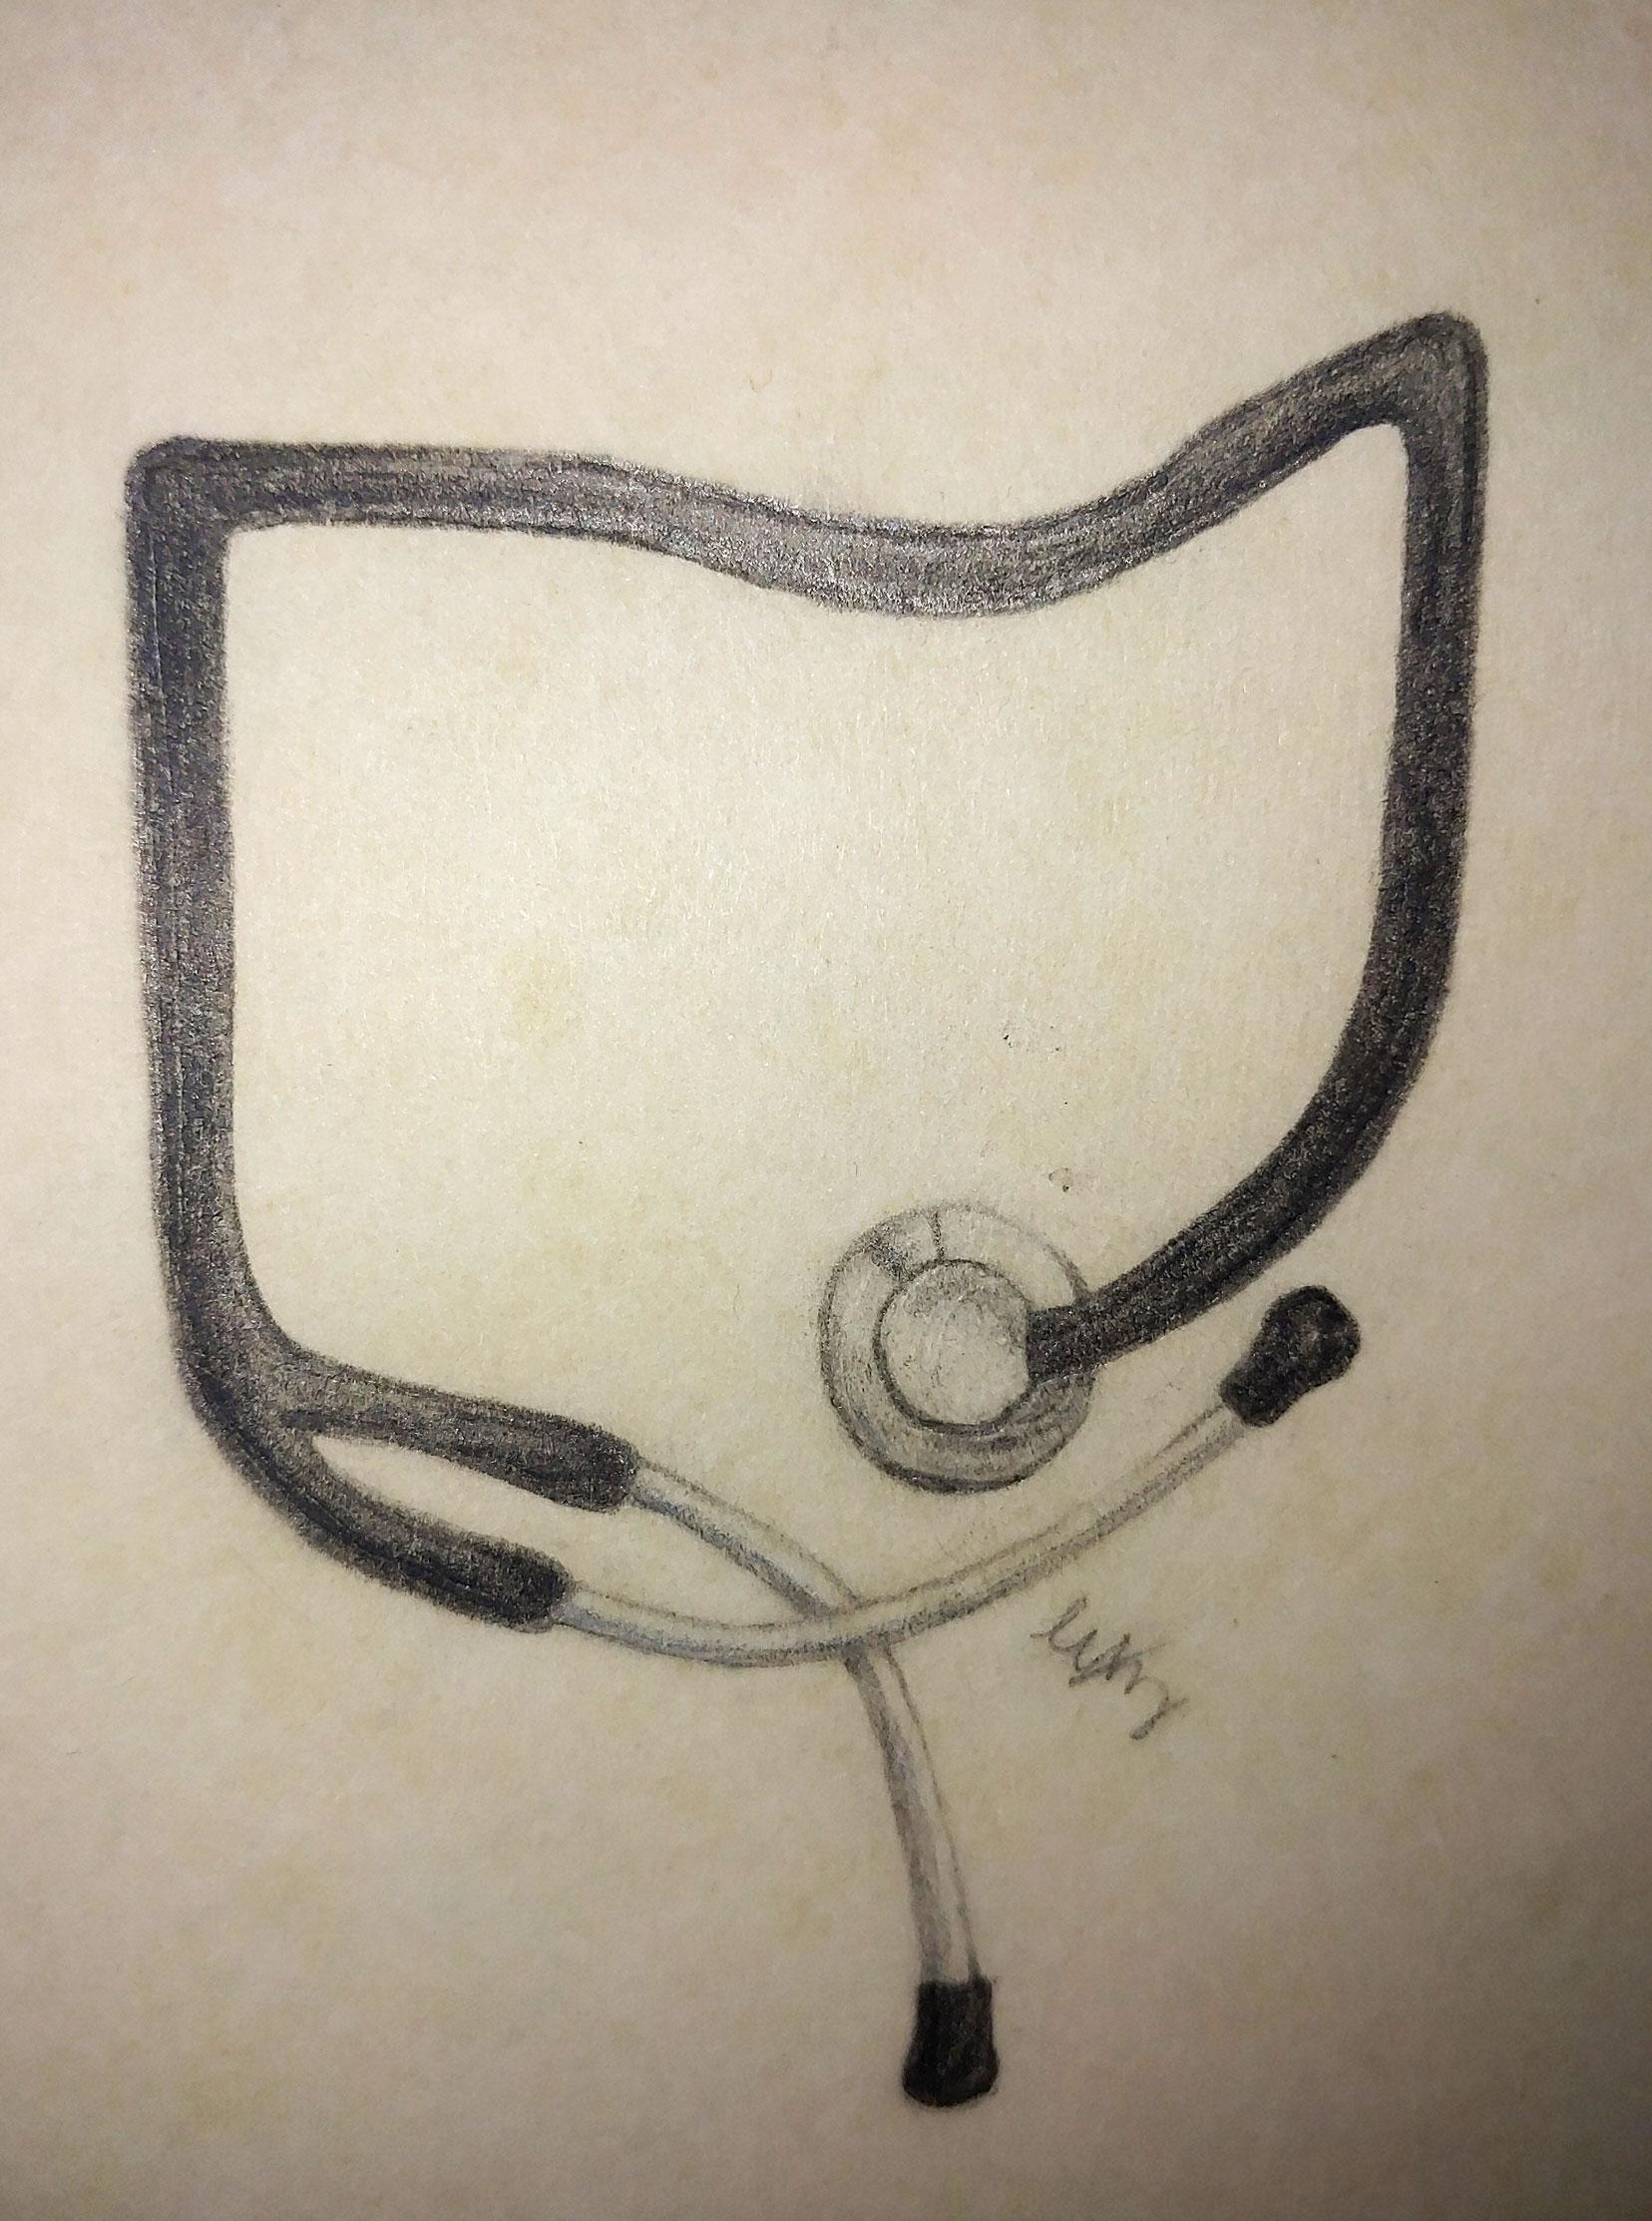 Drawing of a stethoscope shaped like Ohio